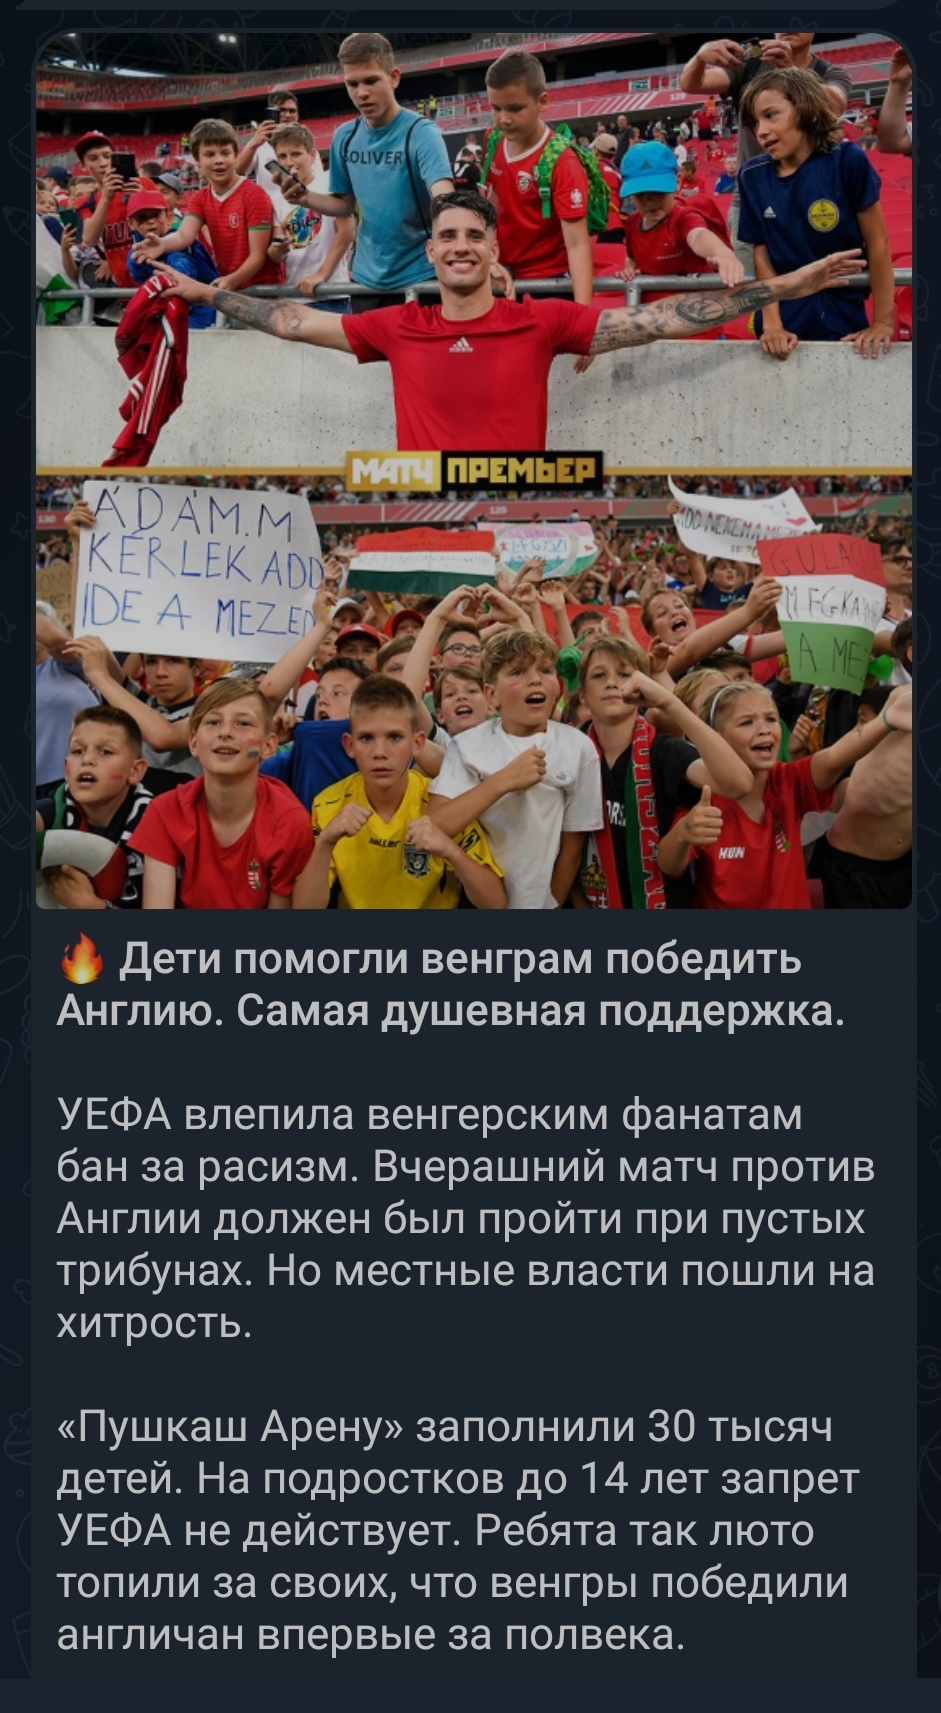 They broke the system! - Football, Children, Milota, Broke the system, Hungary, Screenshot, UEFA